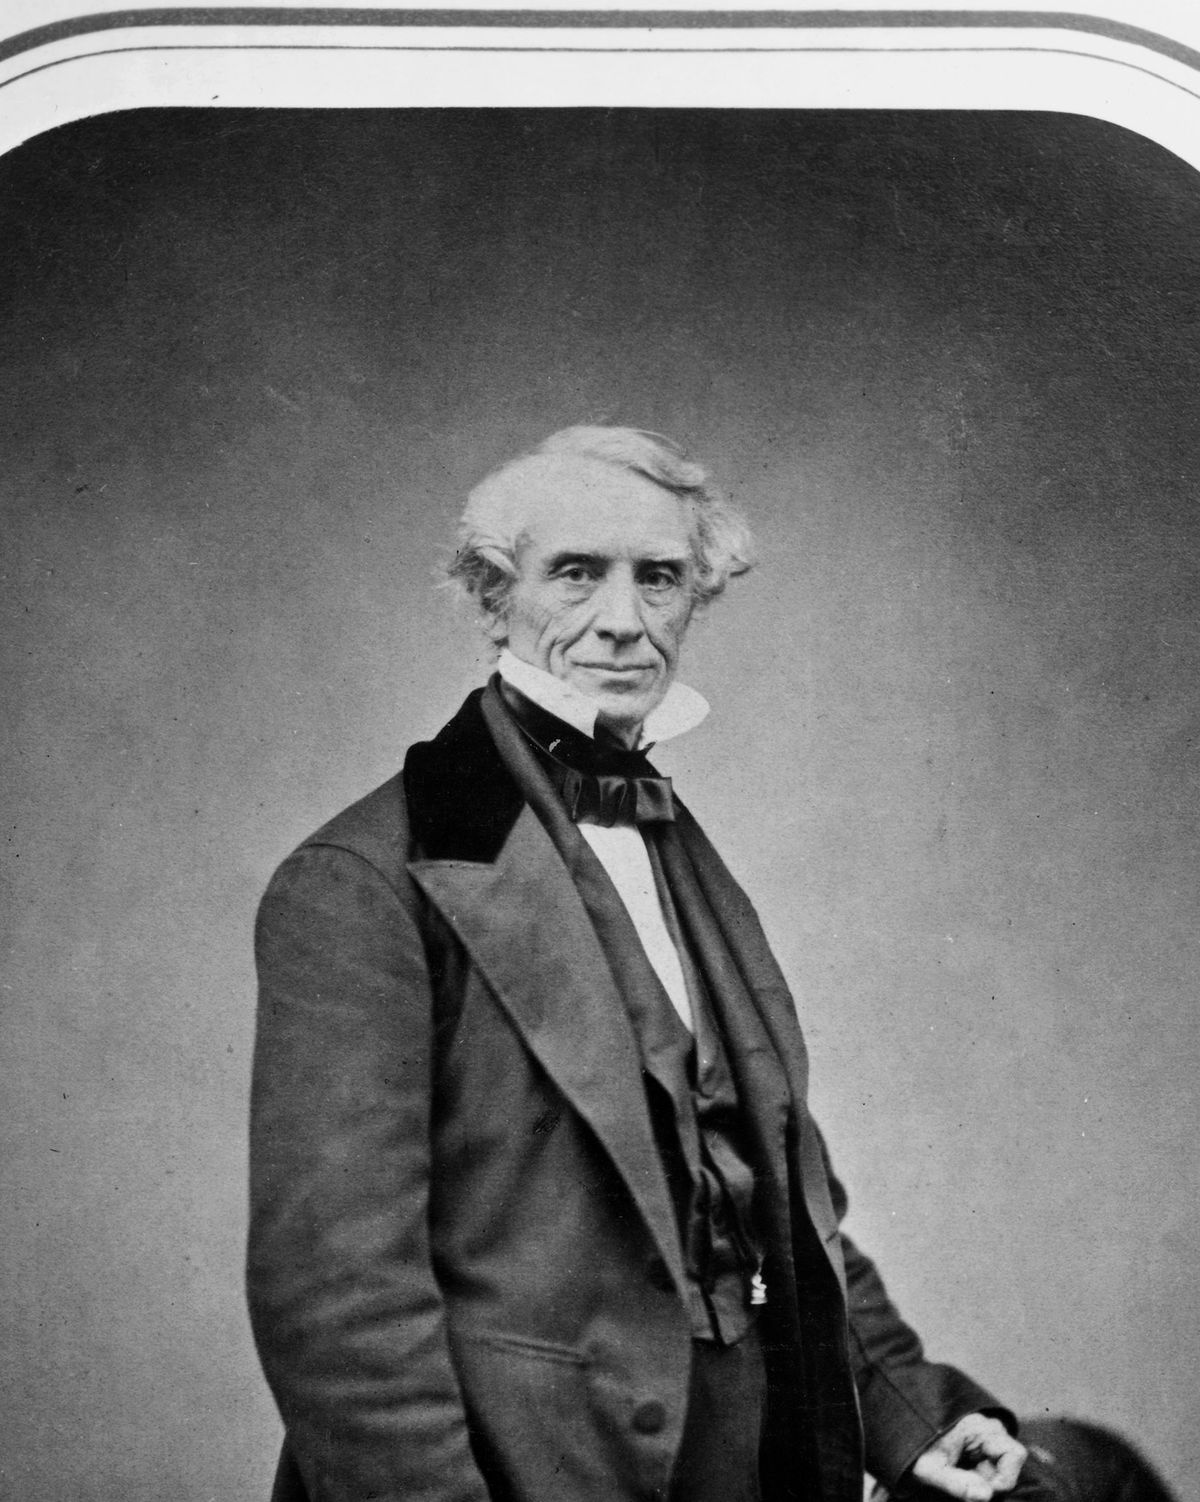 Samuel F. B. Morse